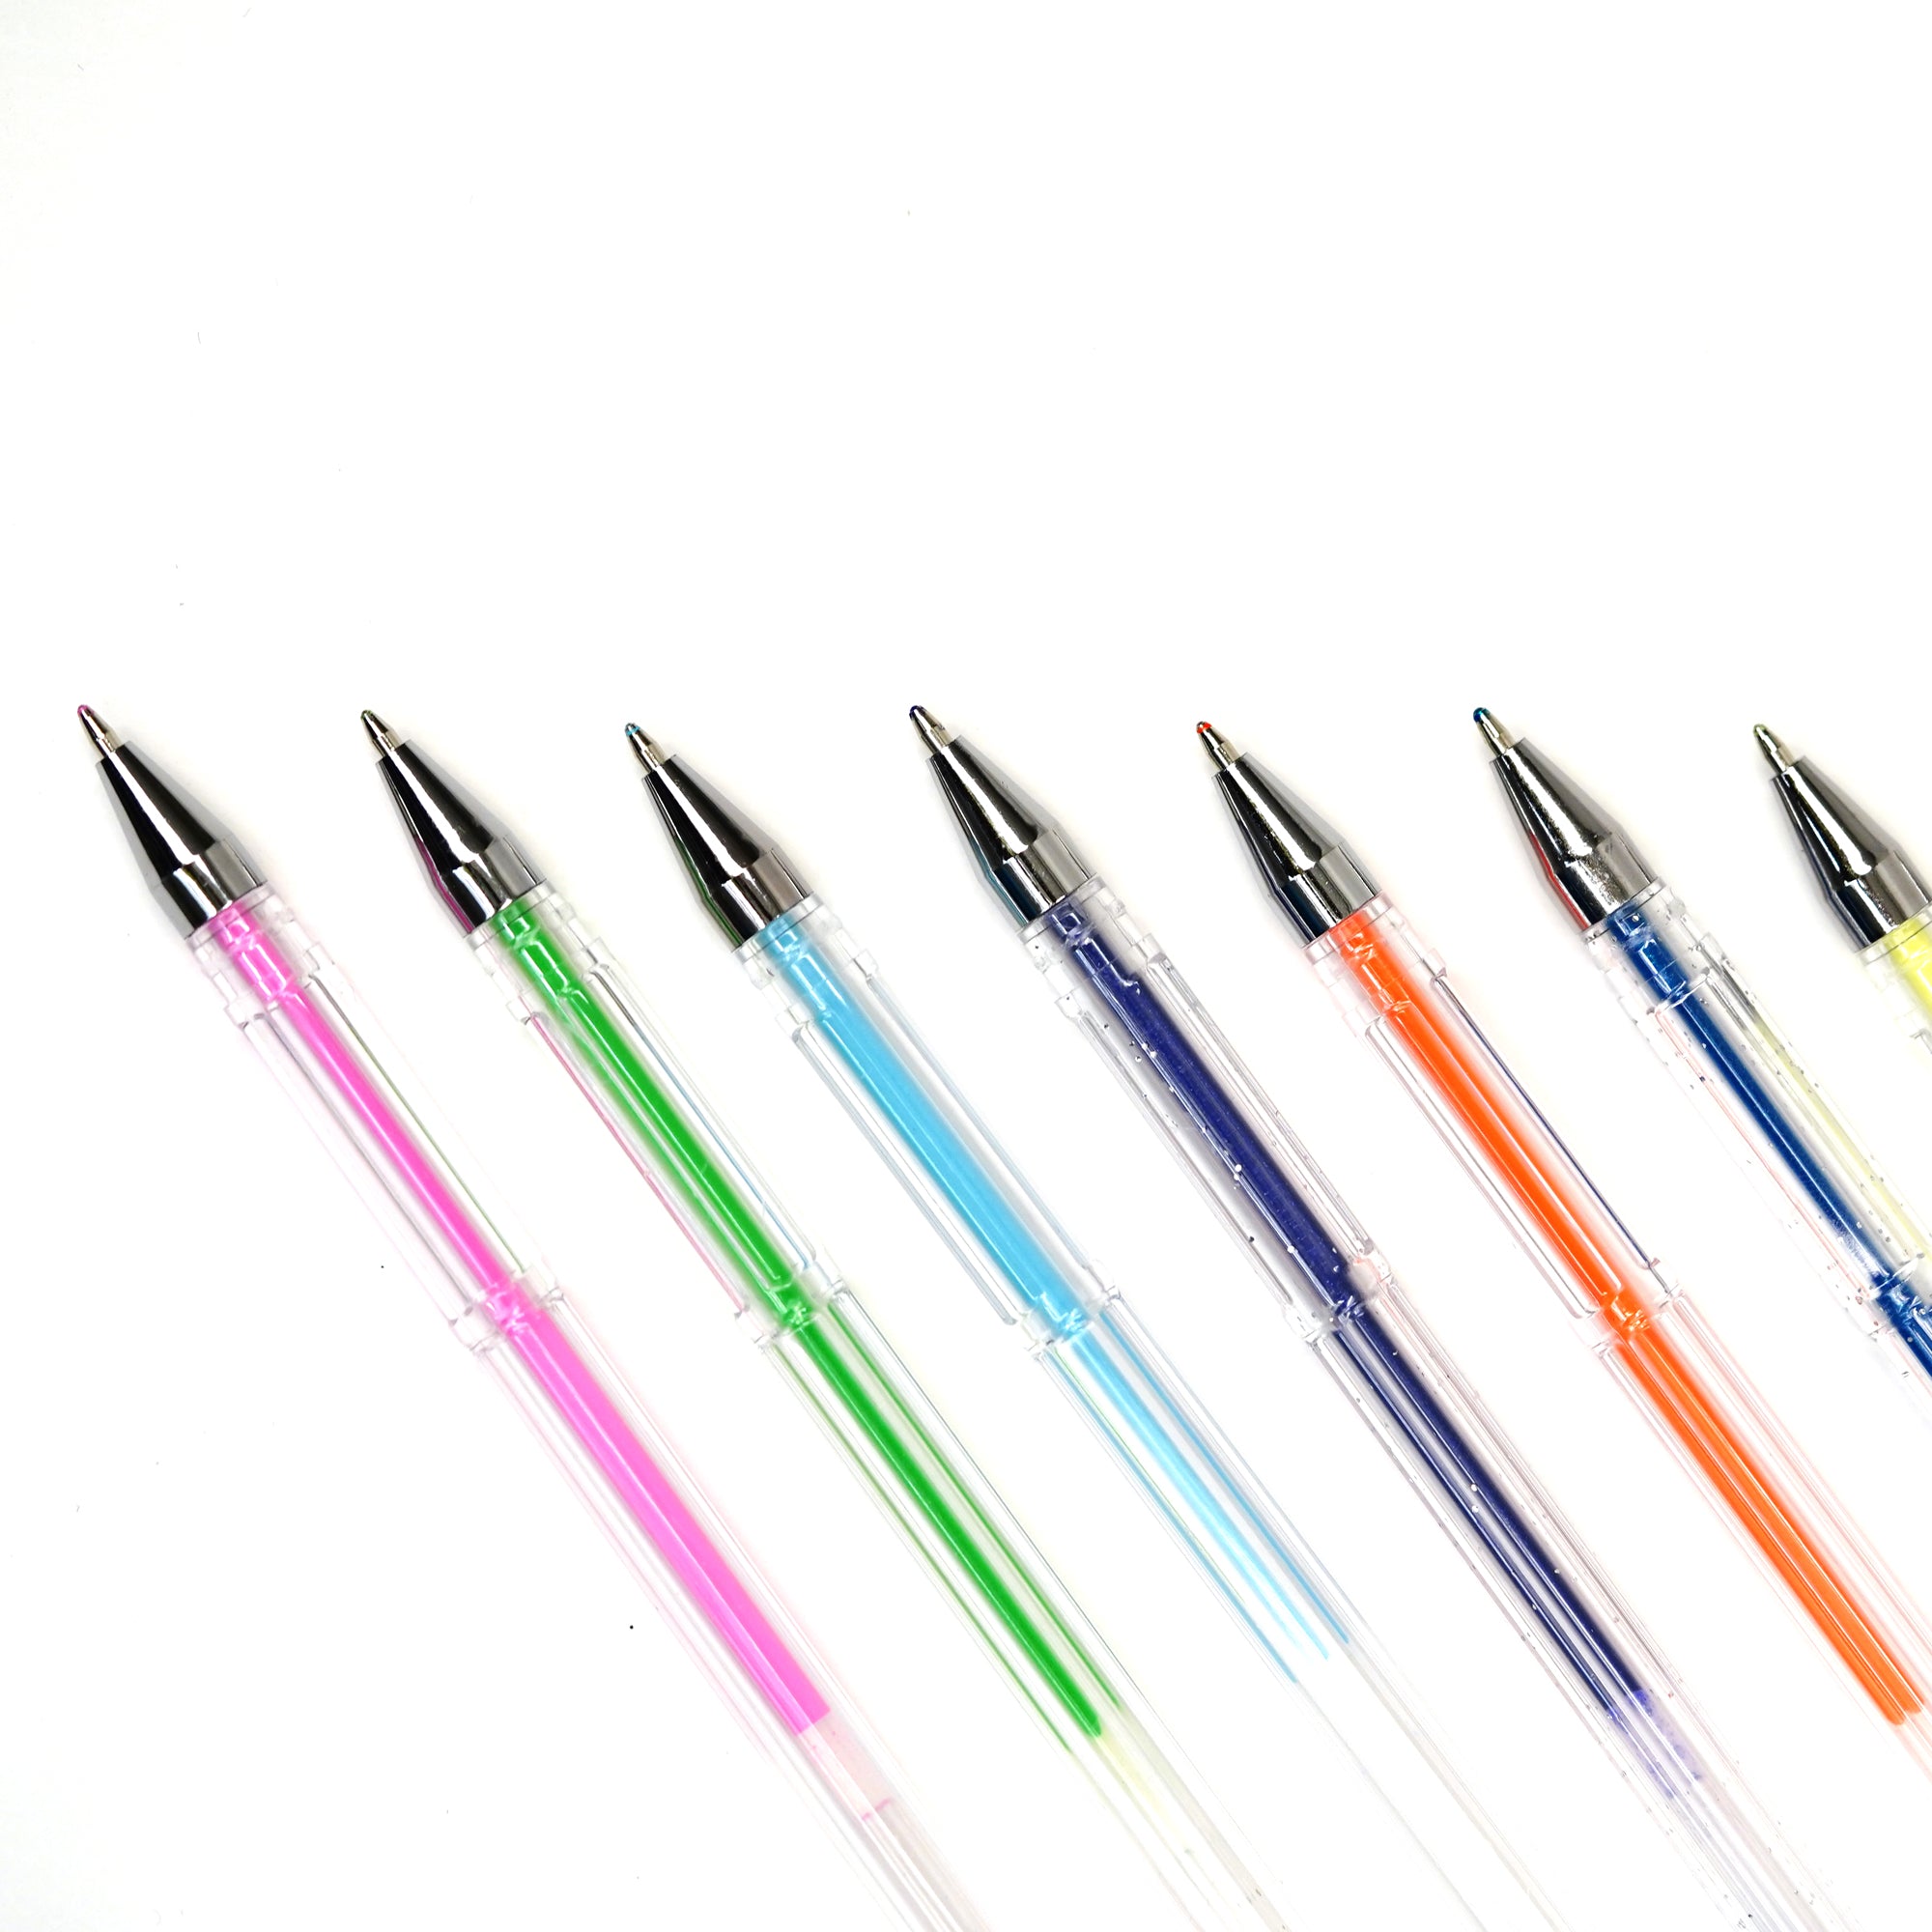 VaOlA ART Colored Gel Pens - Sets of 36 and 30 Pens